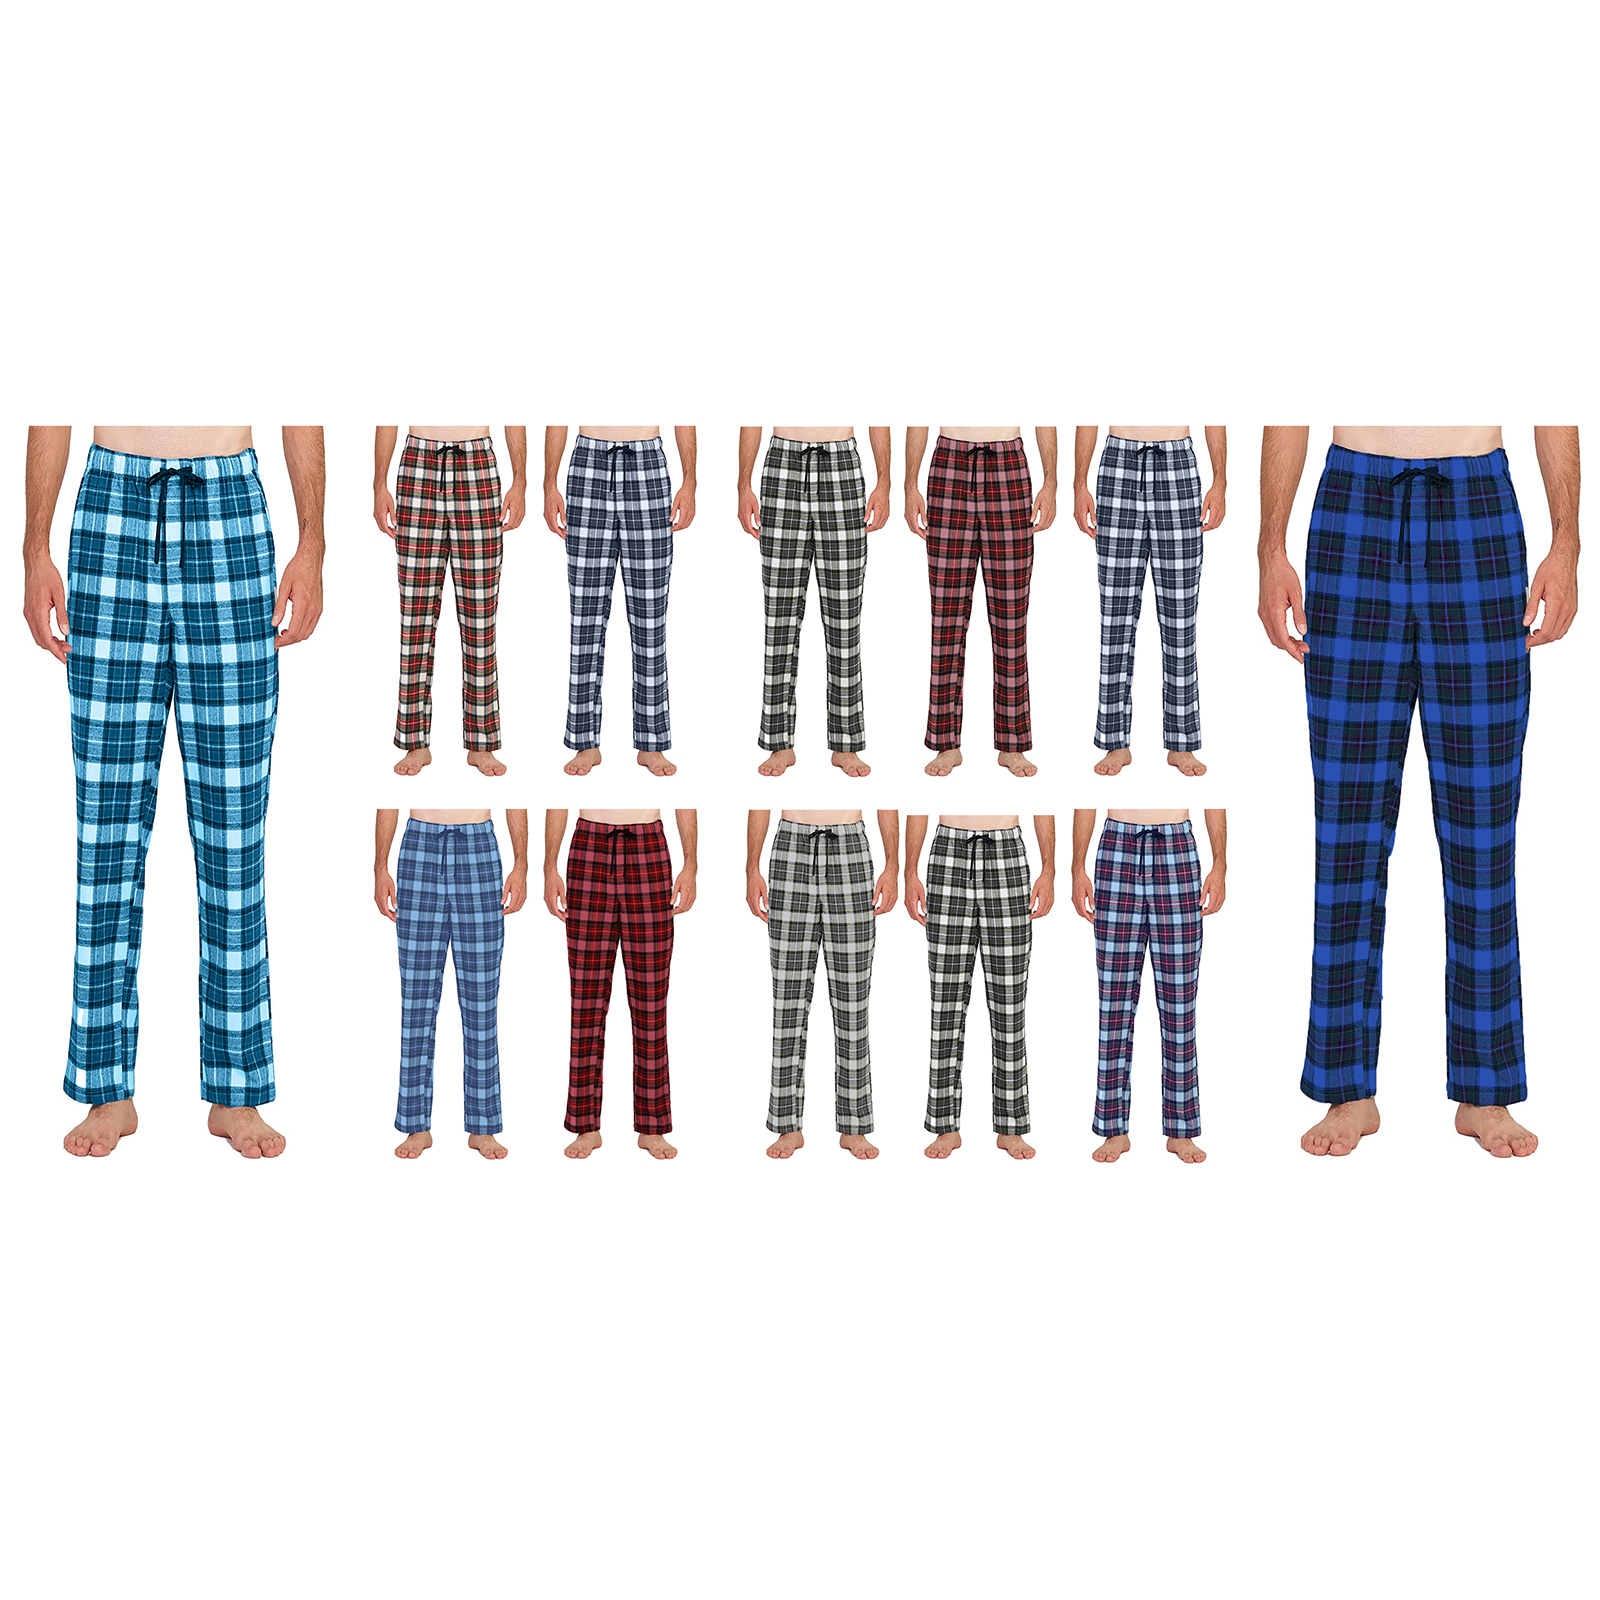 2-Pack: Men's Soft 100% Cotton Flannel Plaid Lounge Pajama Sleep Pants - Medium